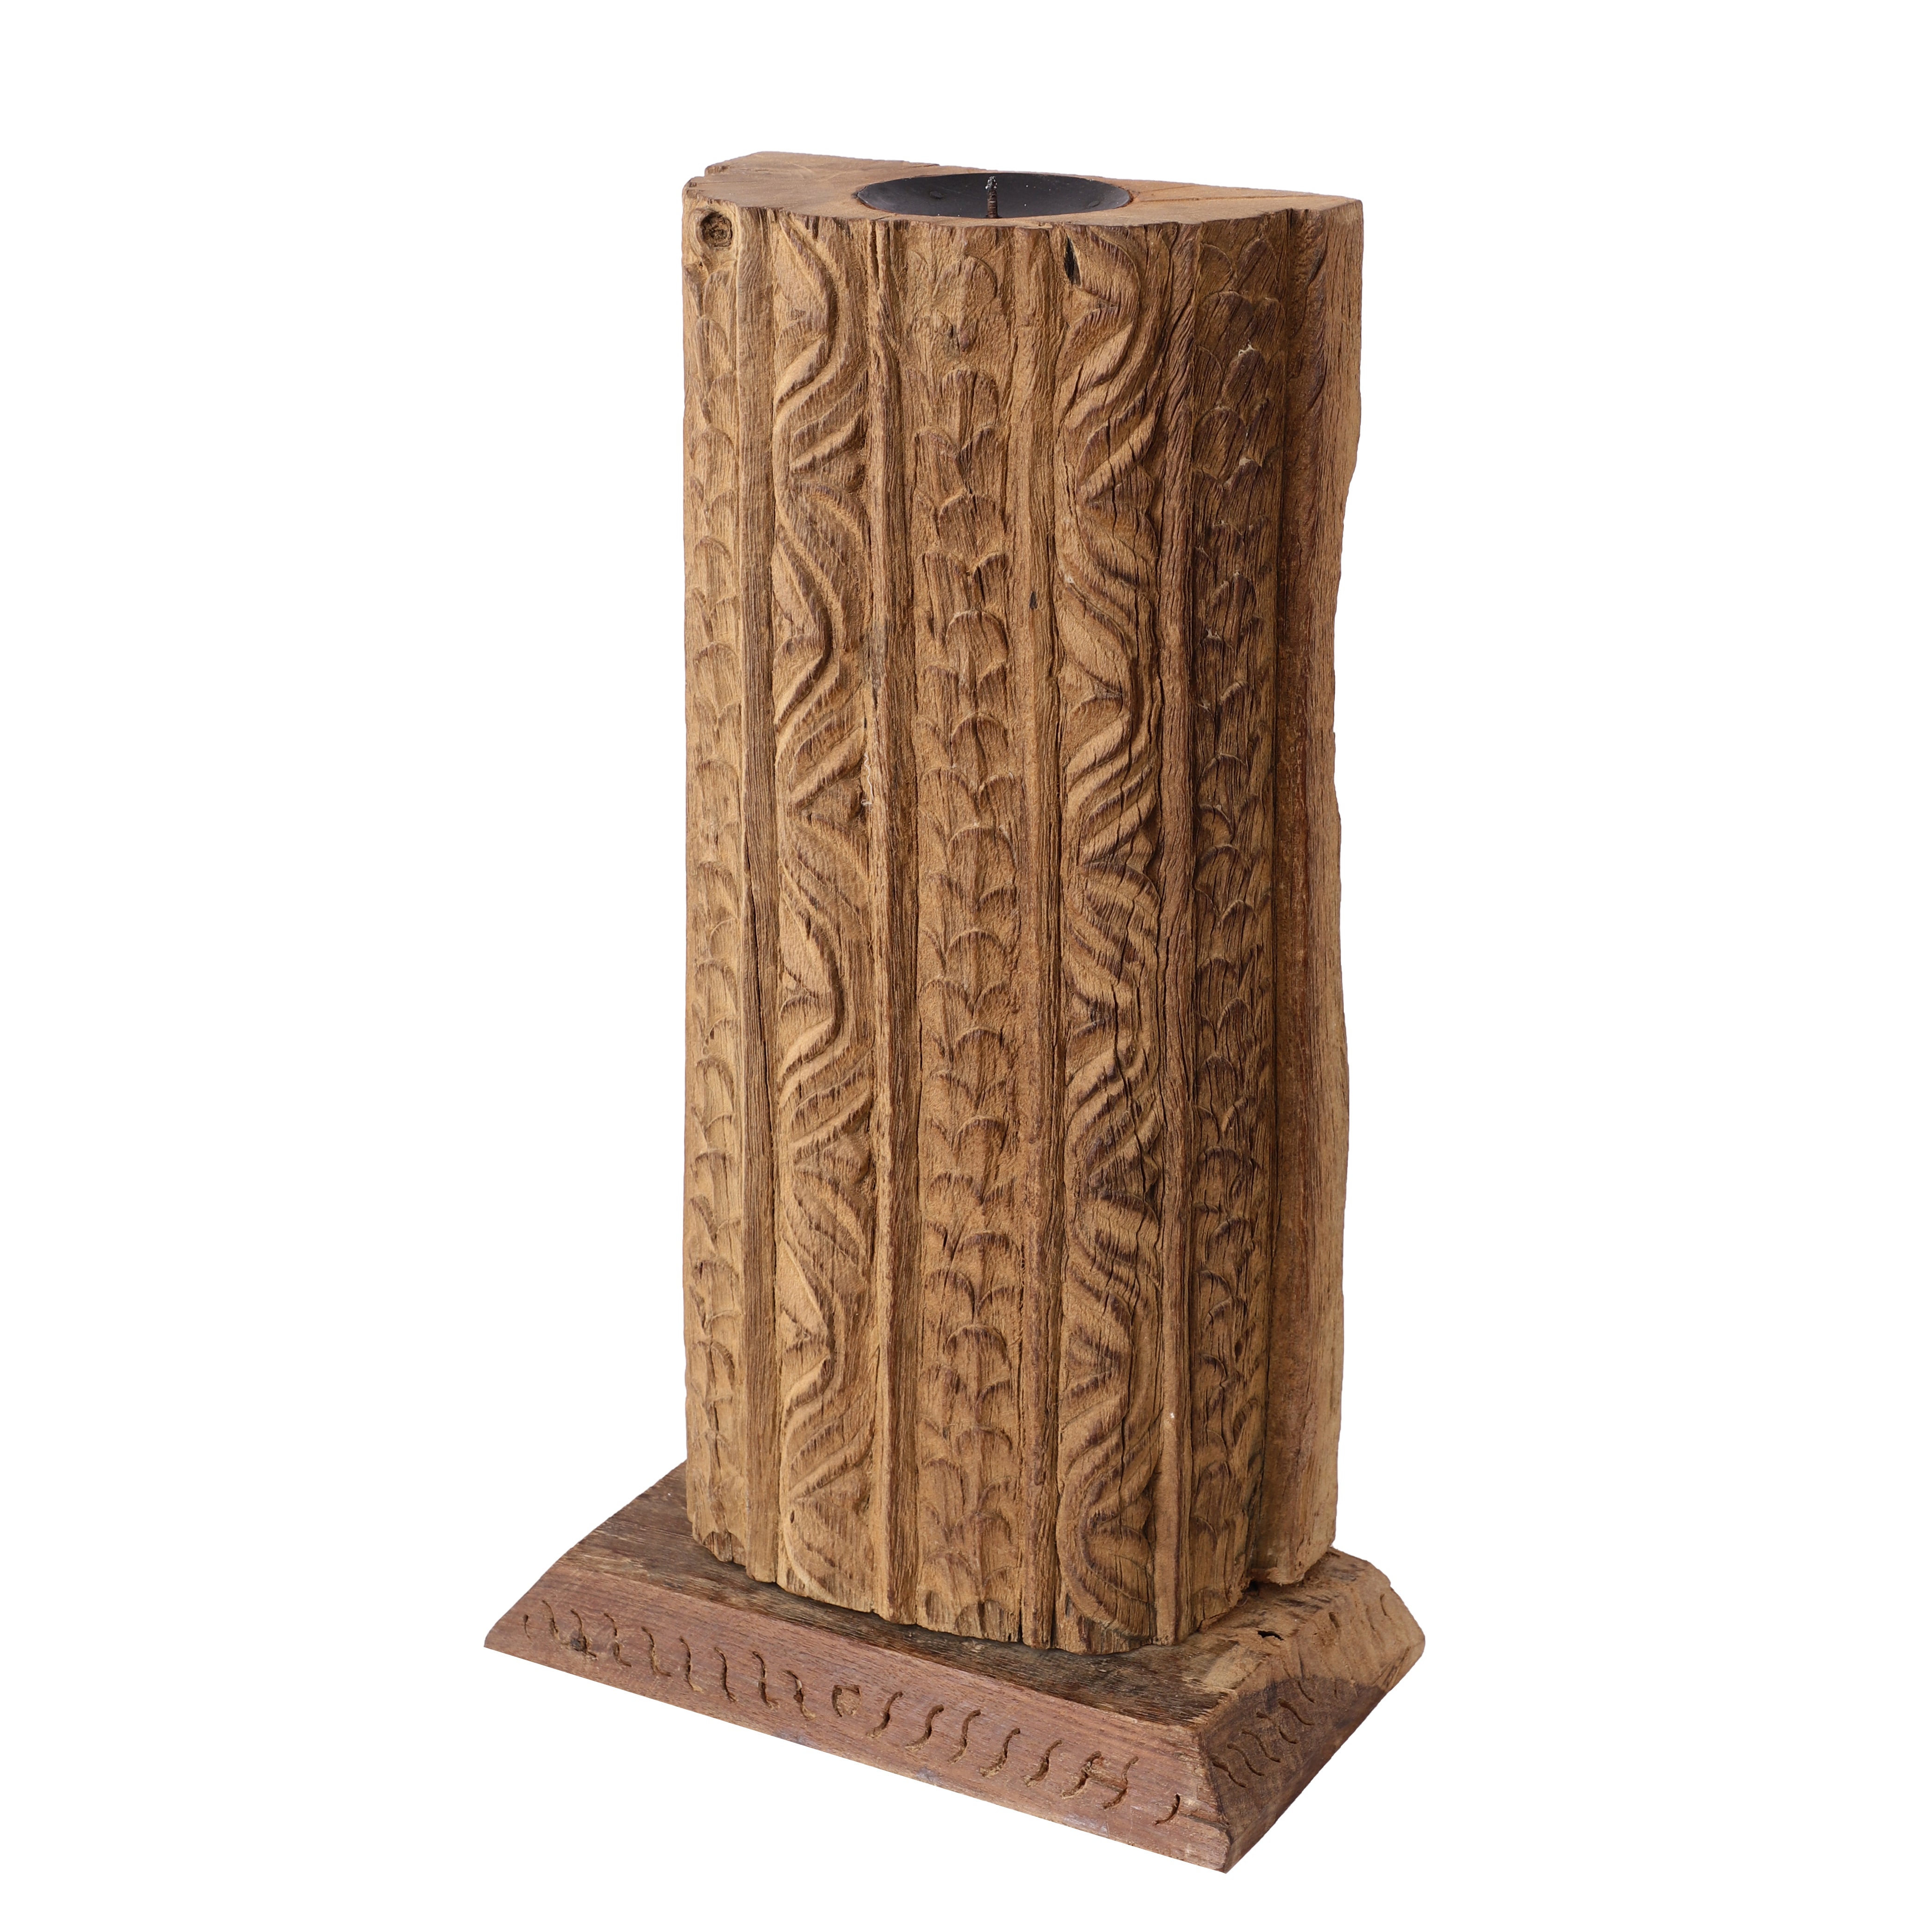 Antique Carved Wooden Candle Pillar (Half-Round)